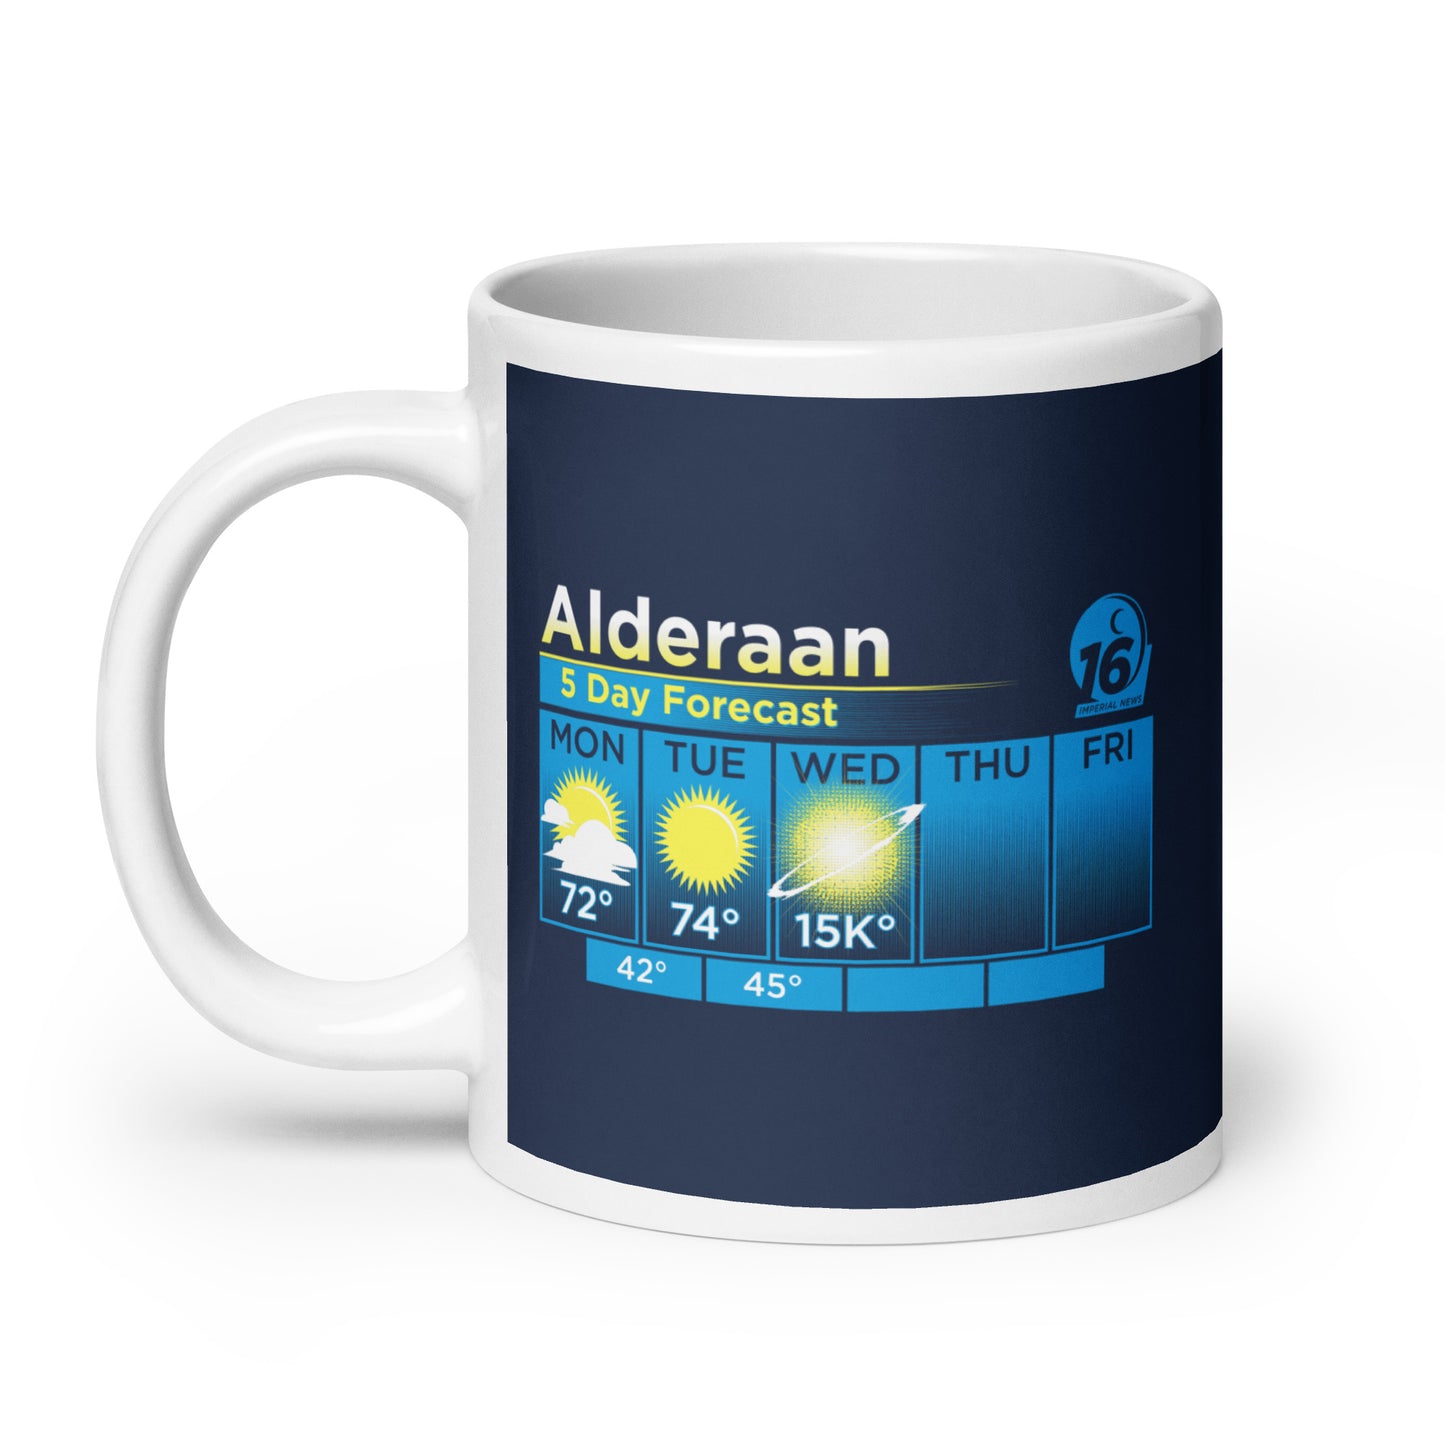 Alderaan 5 Day Forecast Mug